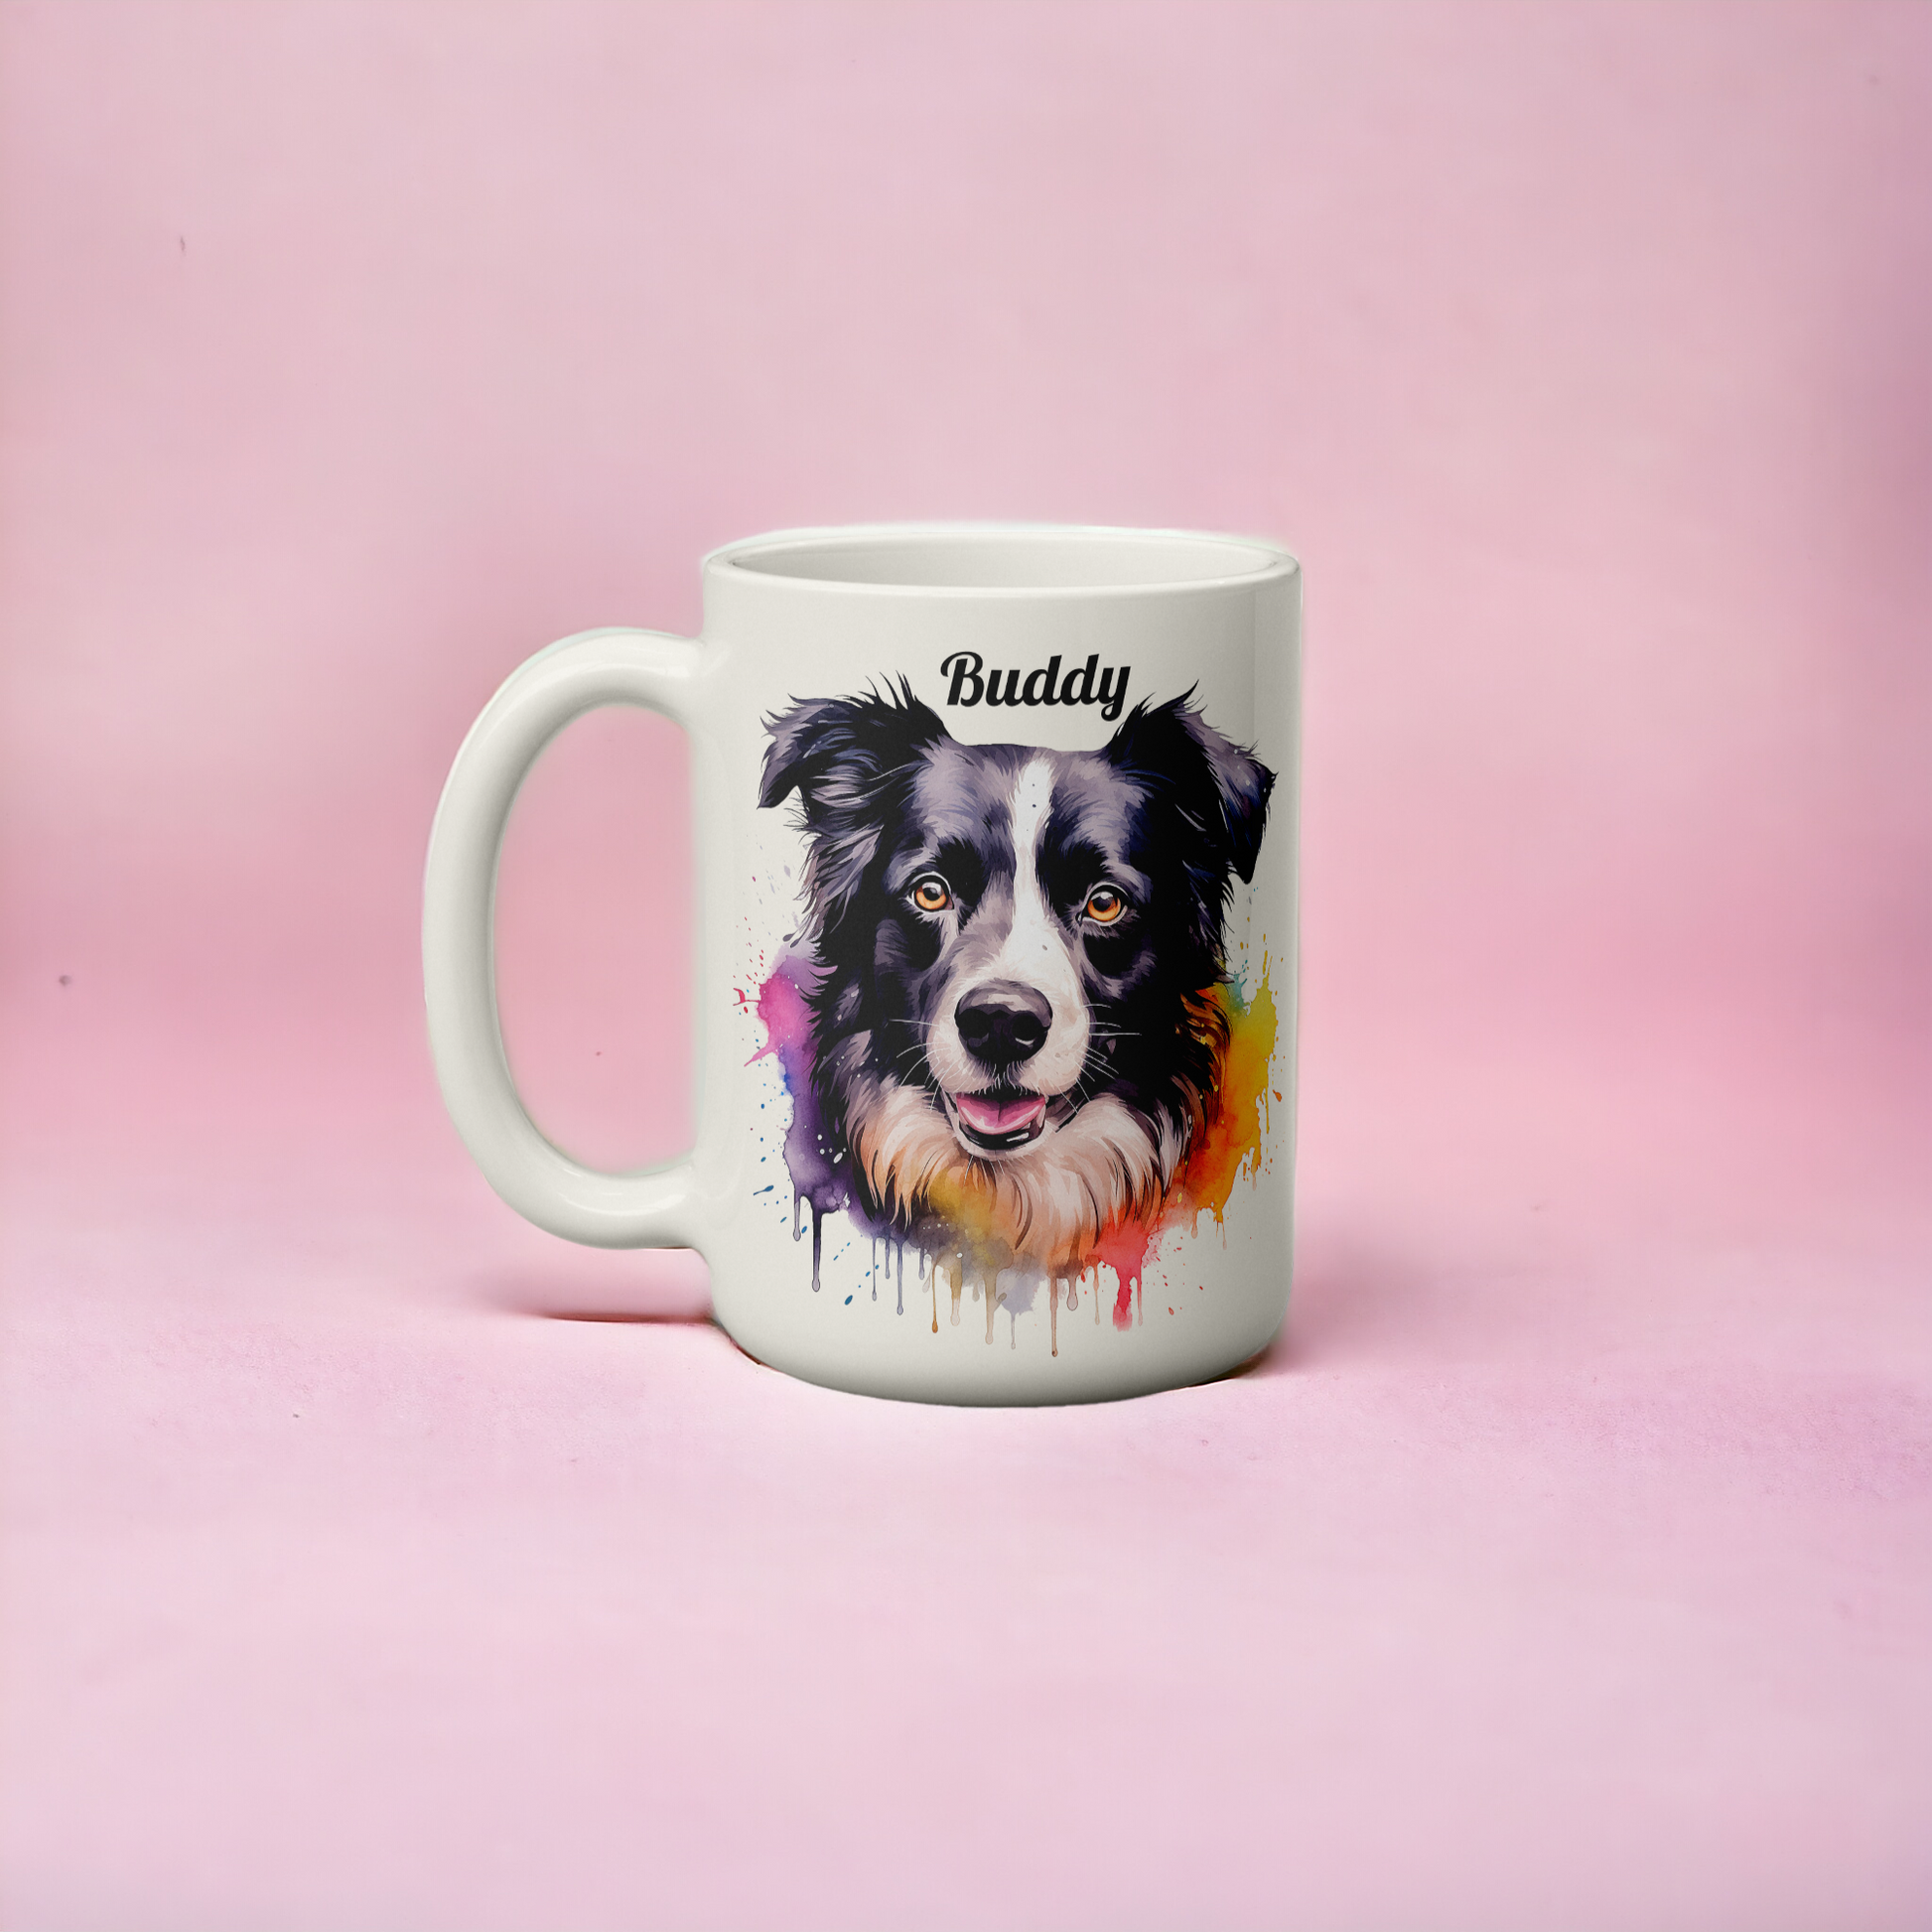  Personalised Border Collie Dog Mug by Free Spirit Accessories sold by Free Spirit Accessories